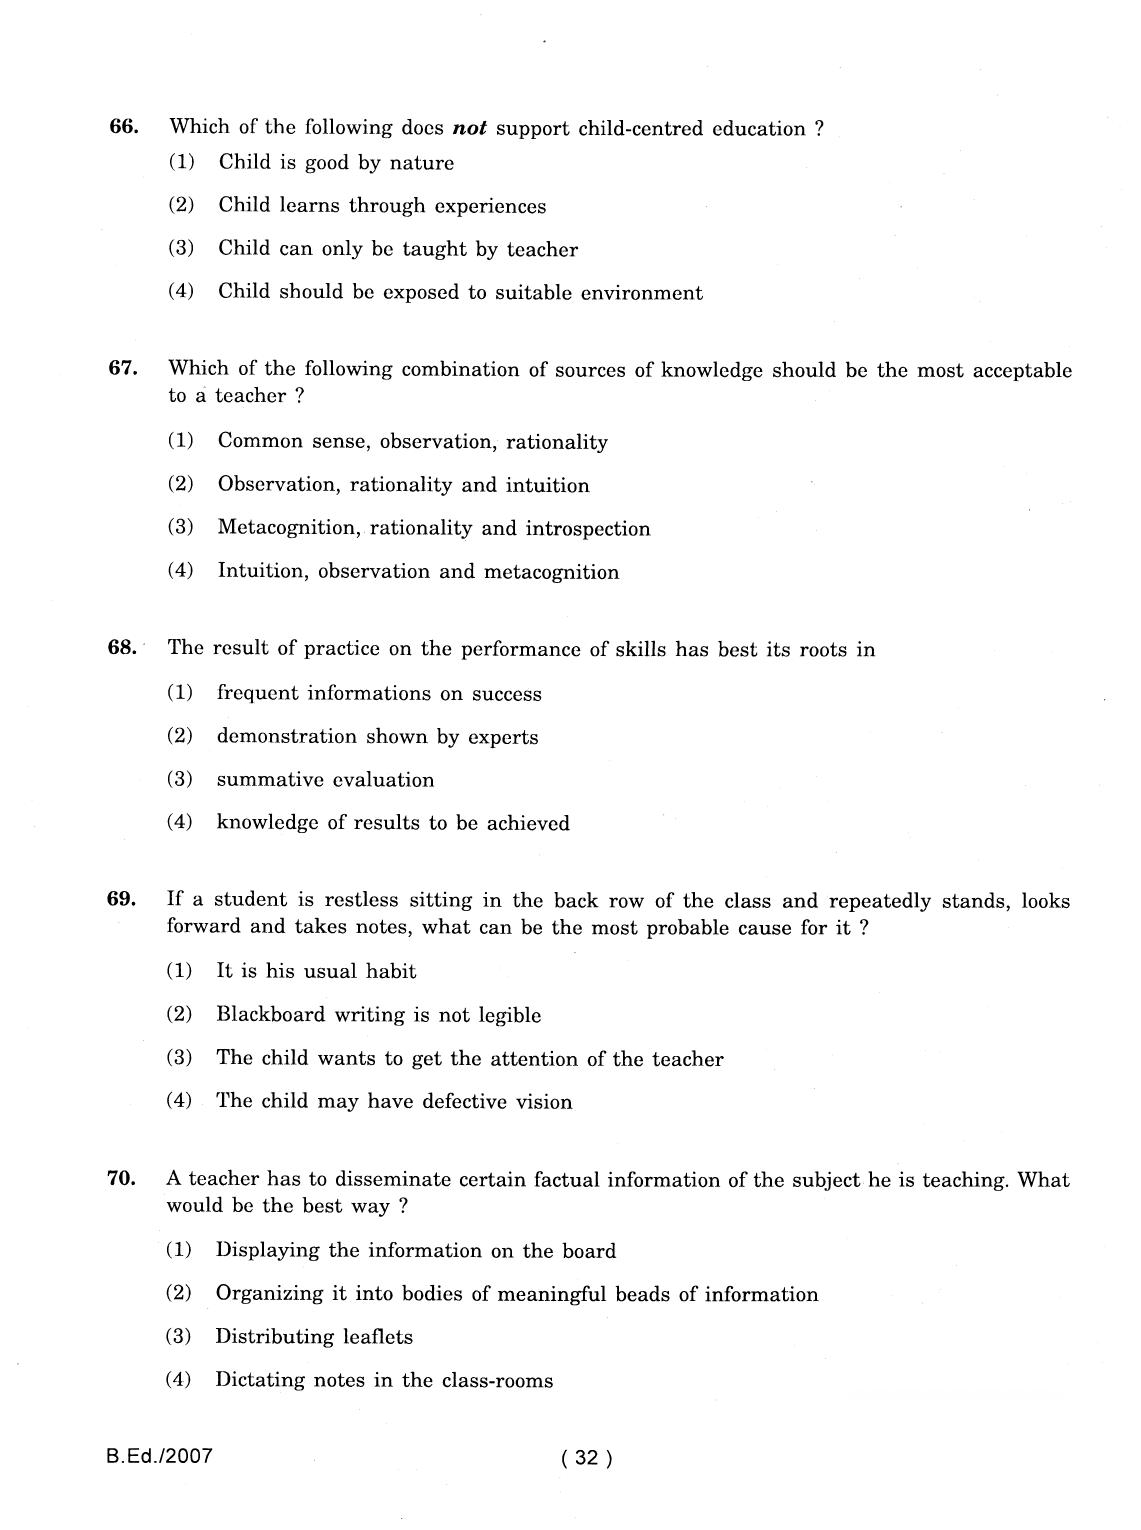 IGNOU B.Ed 2007 Question Paper - Page 32